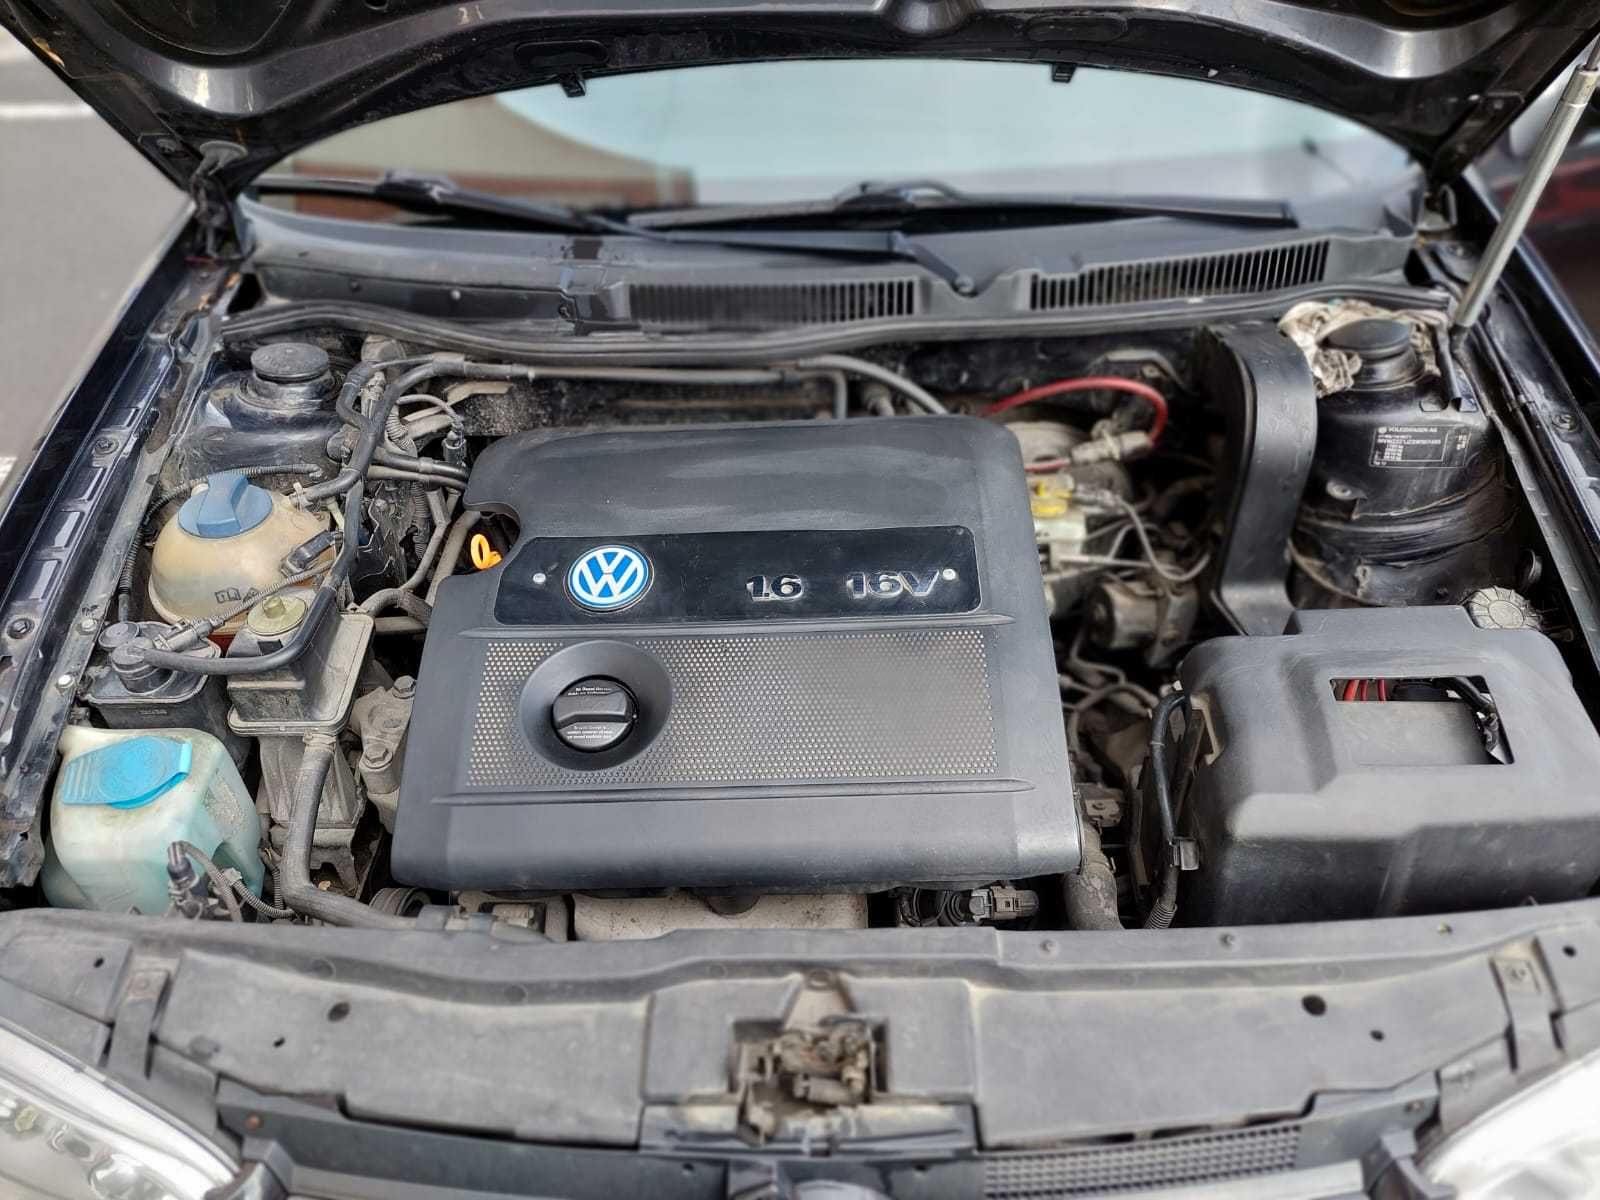 VW Golf IV 2002, 1600 cmc, 16v, 105 CP